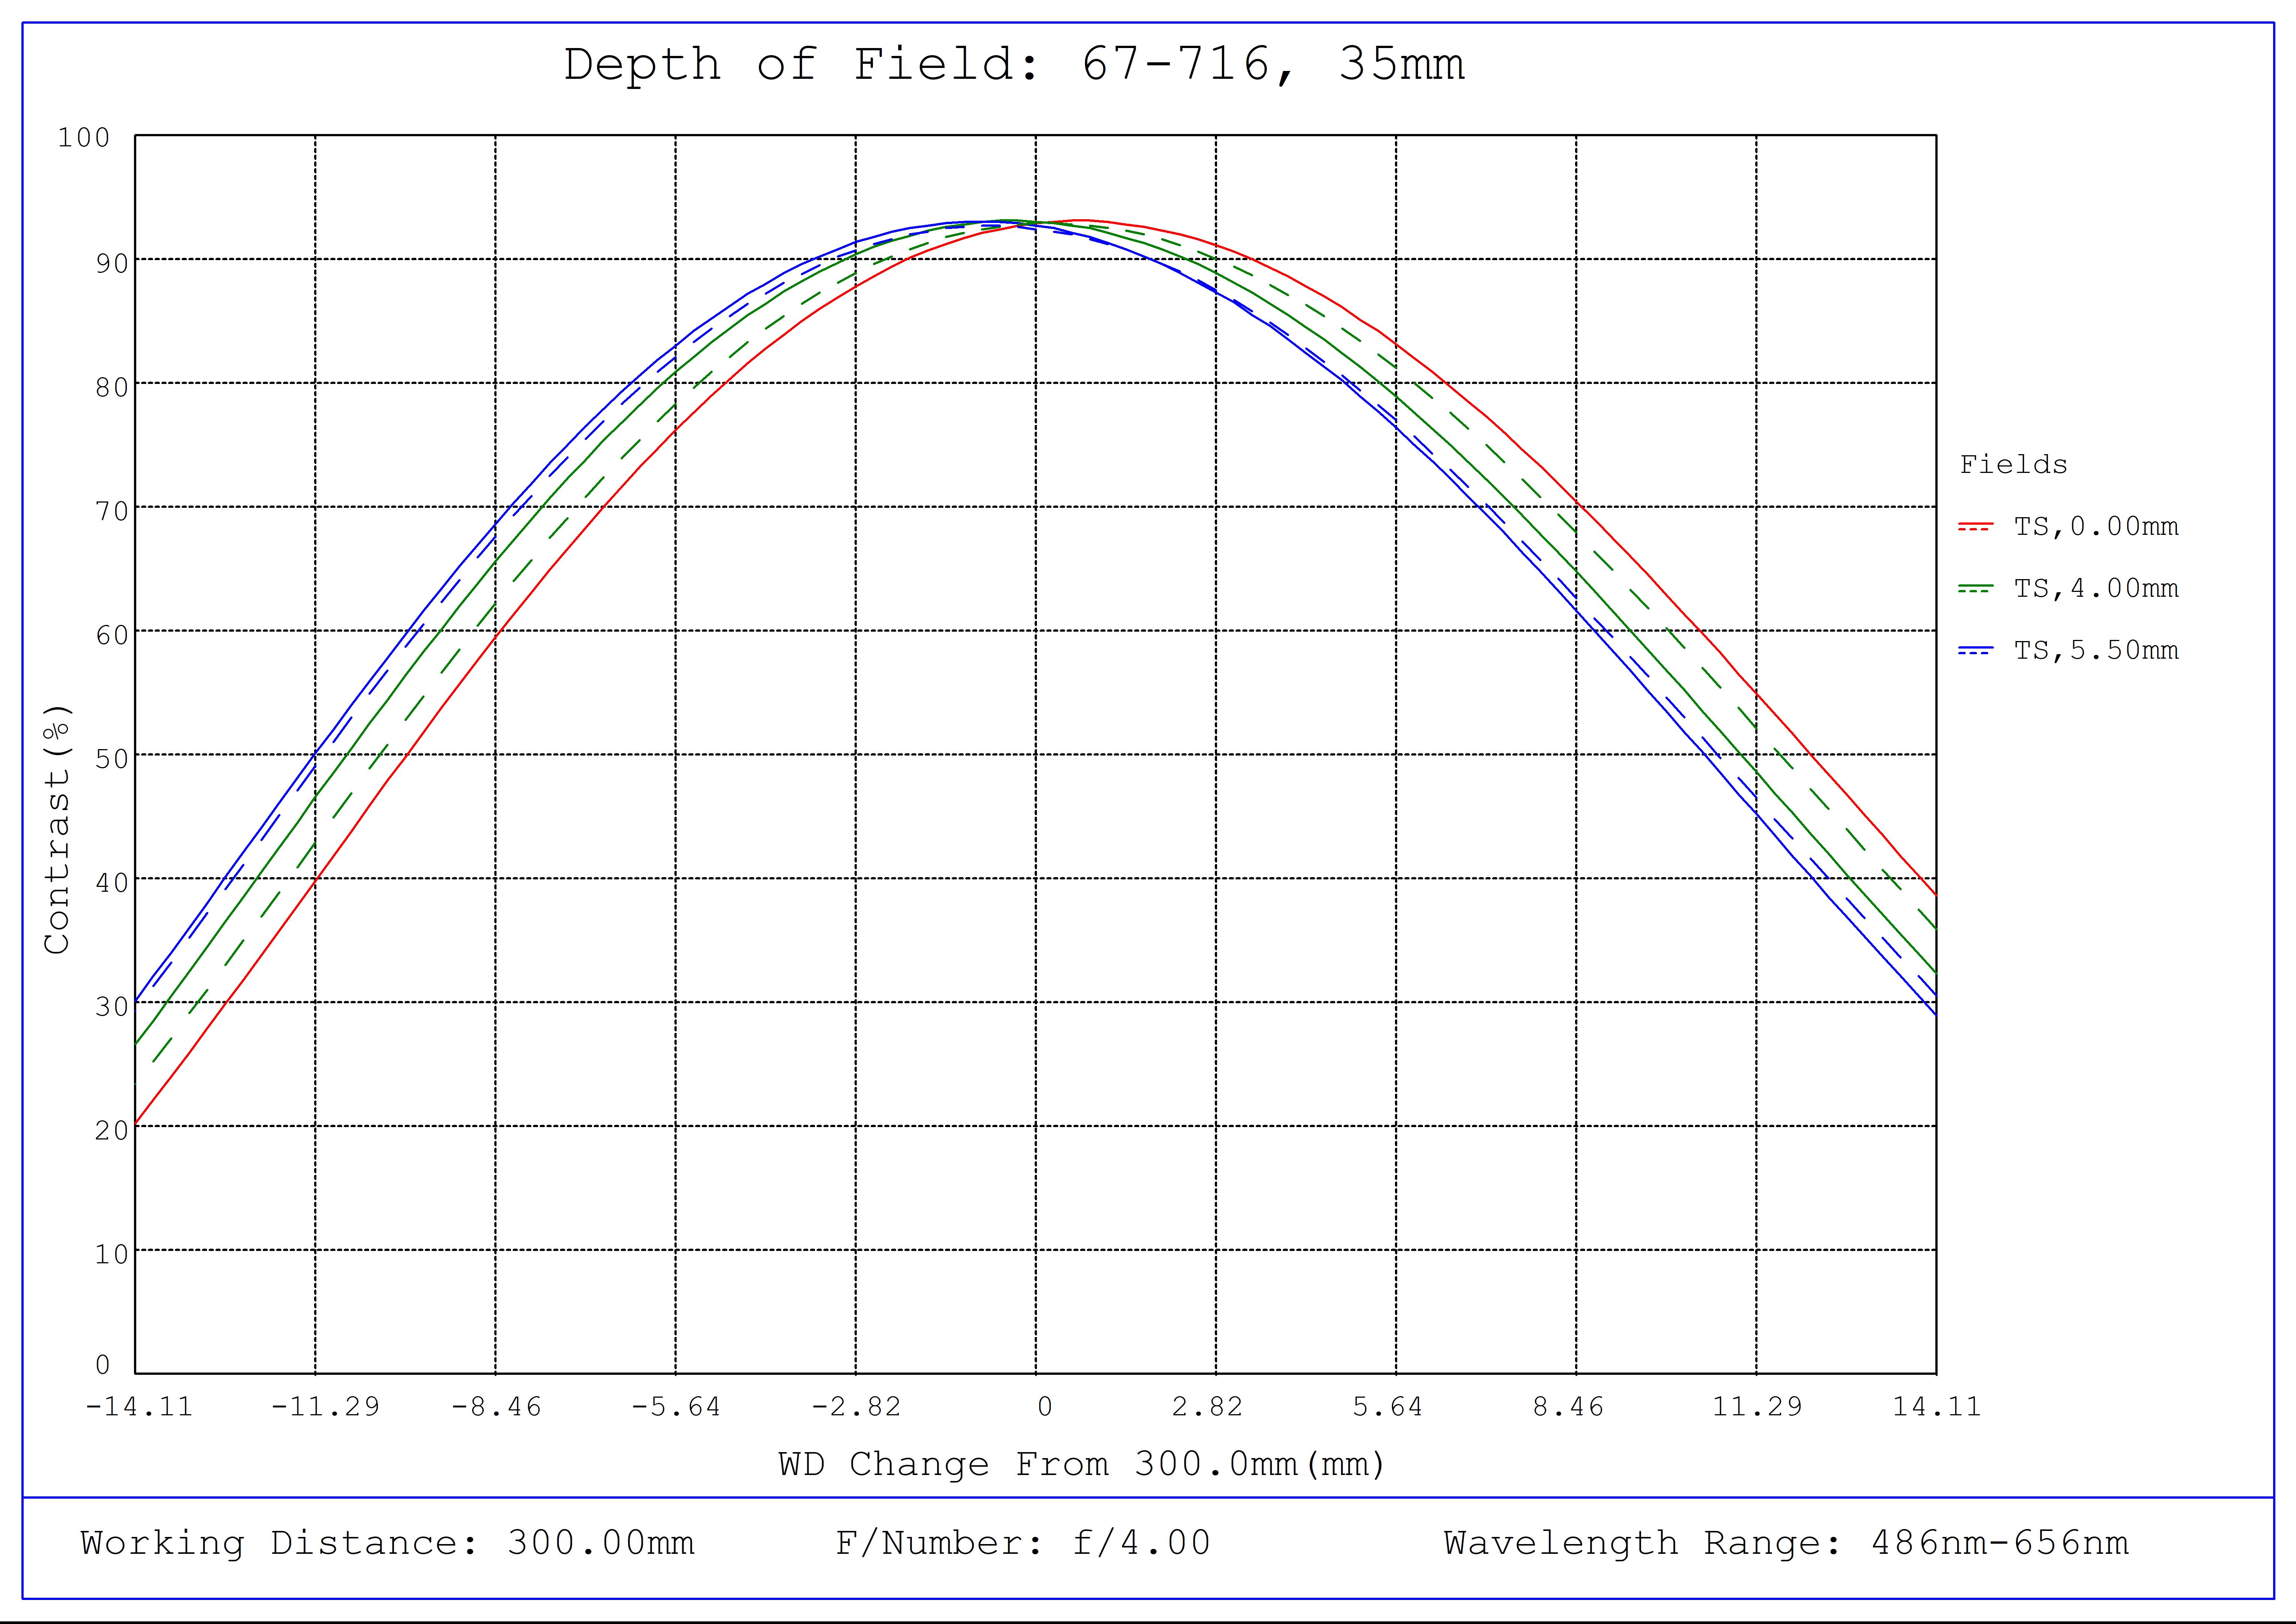 #67-716, 35mm C VIS-NIR Series Fixed Focal Length Lens, Depth of Field Plot, 300mm Working Distance, f4